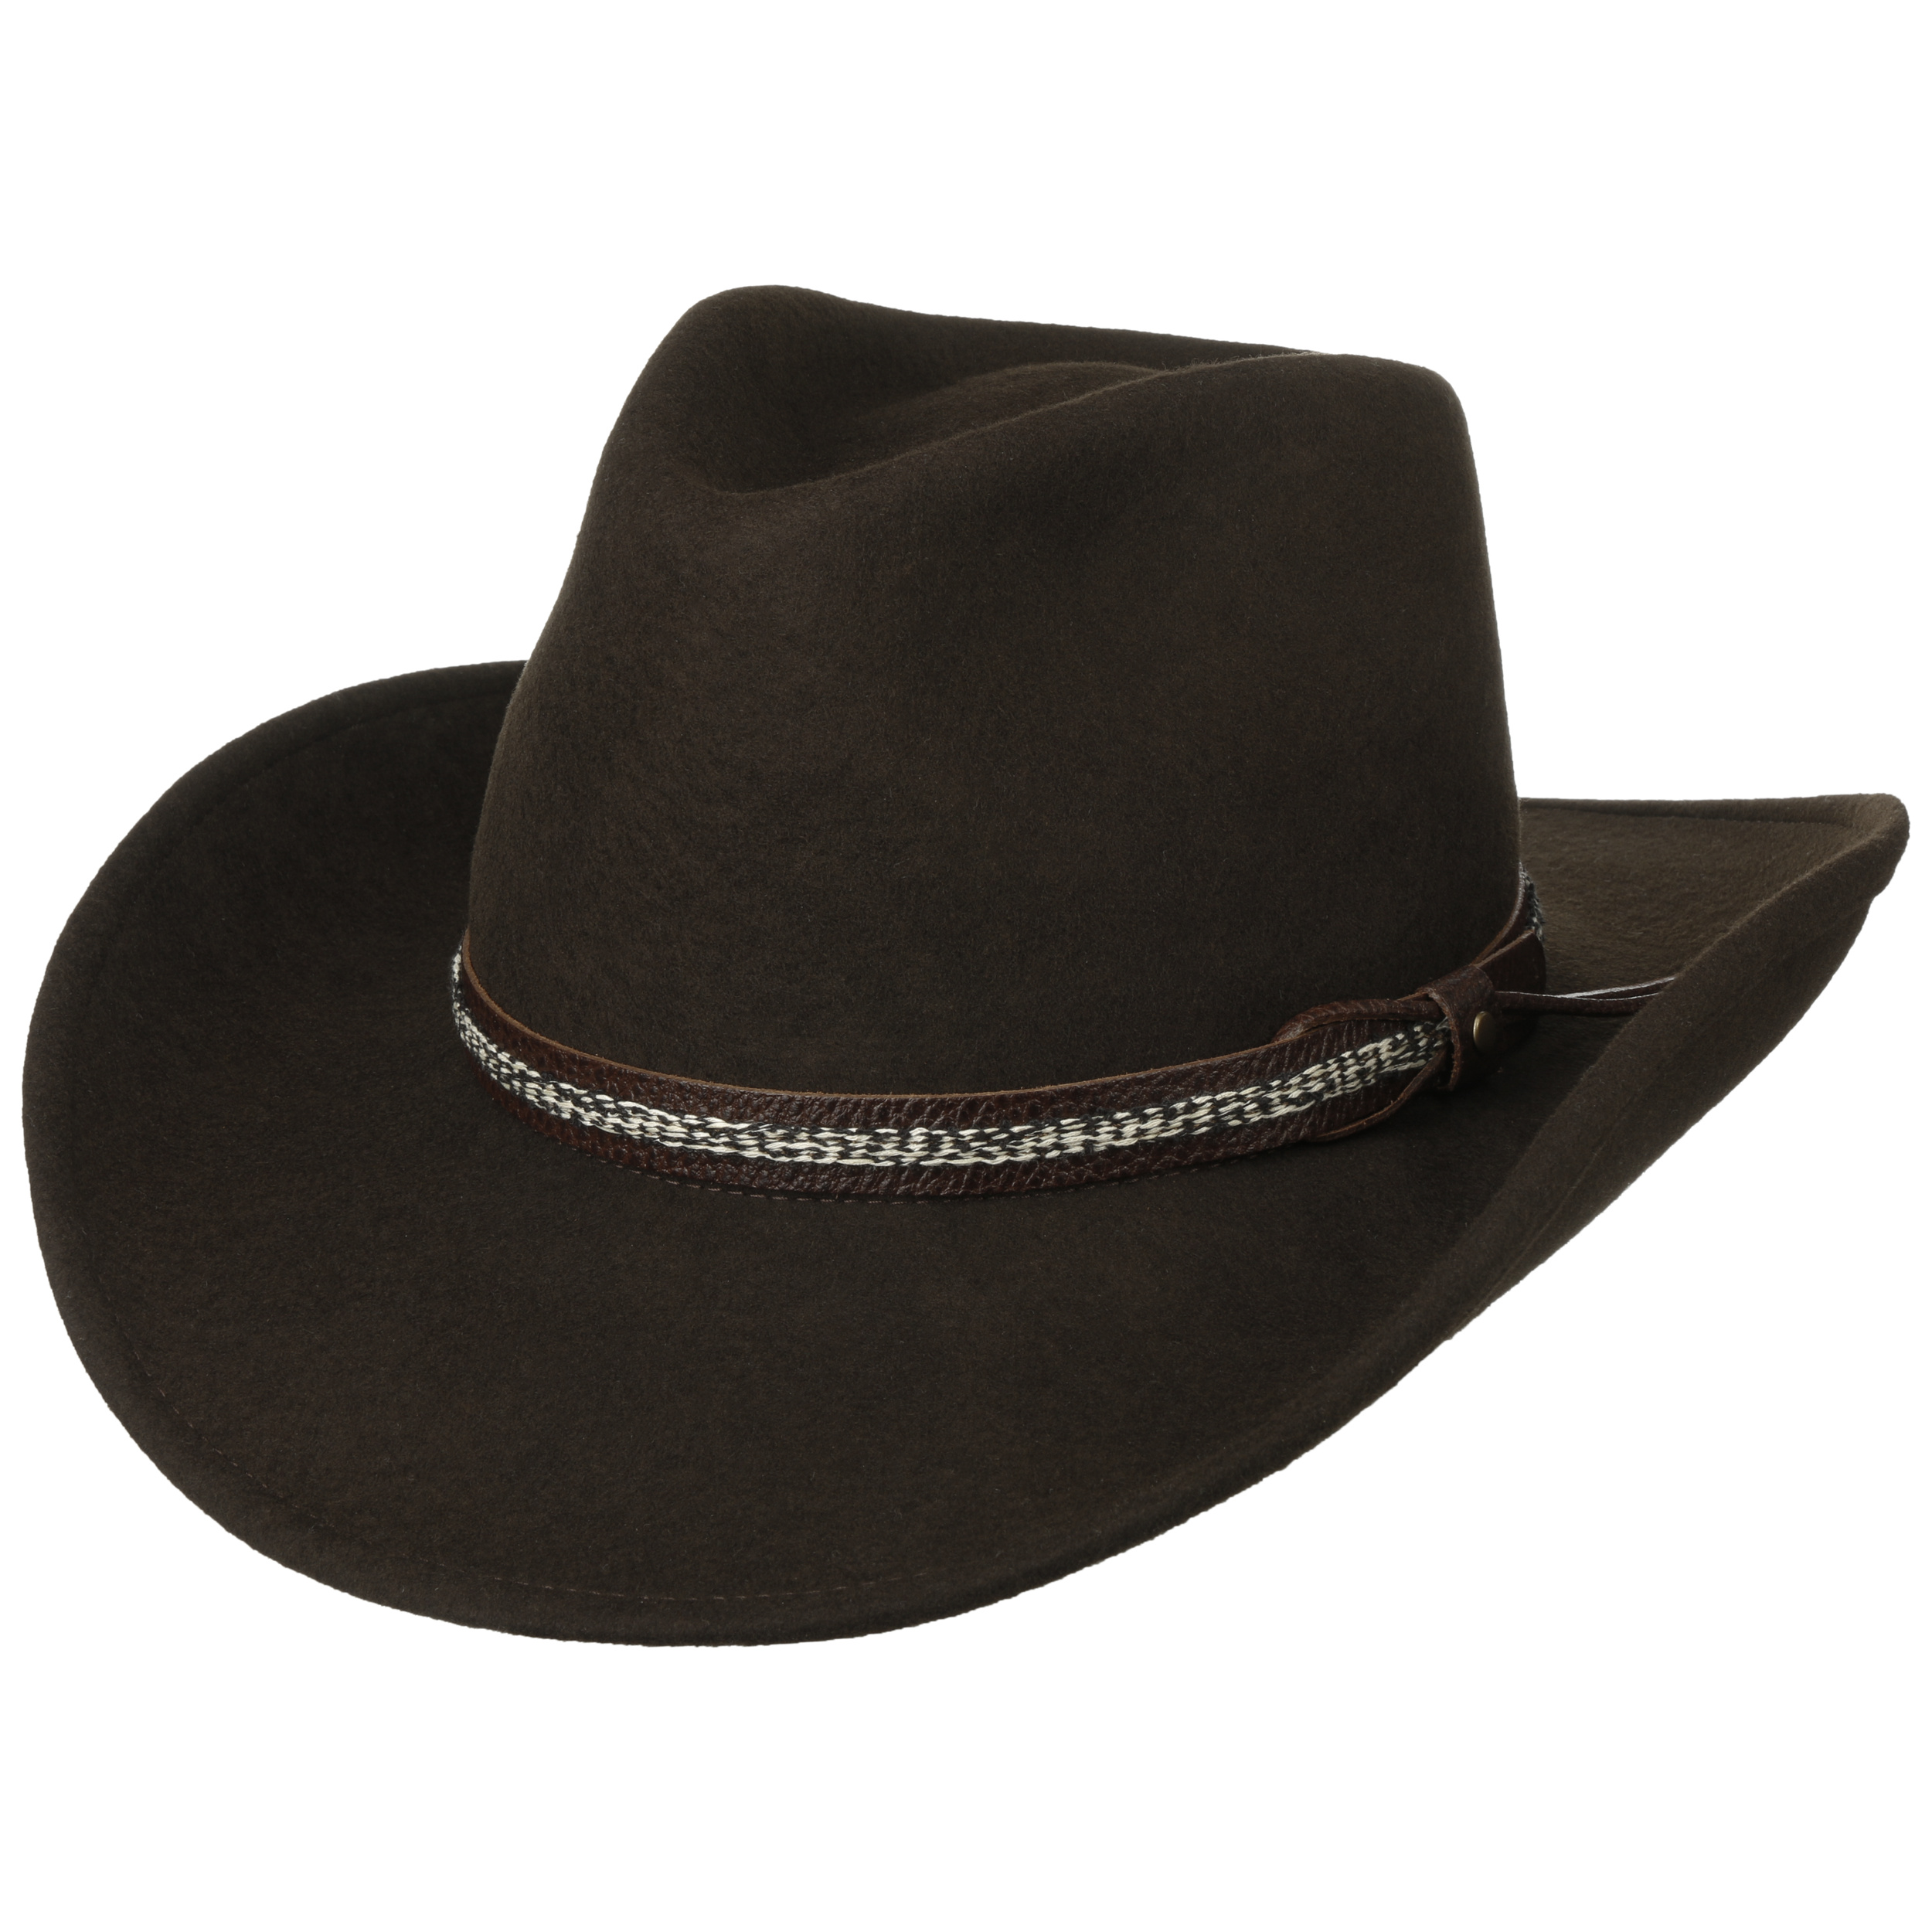 The Rancher Western Hat by Lierys - €